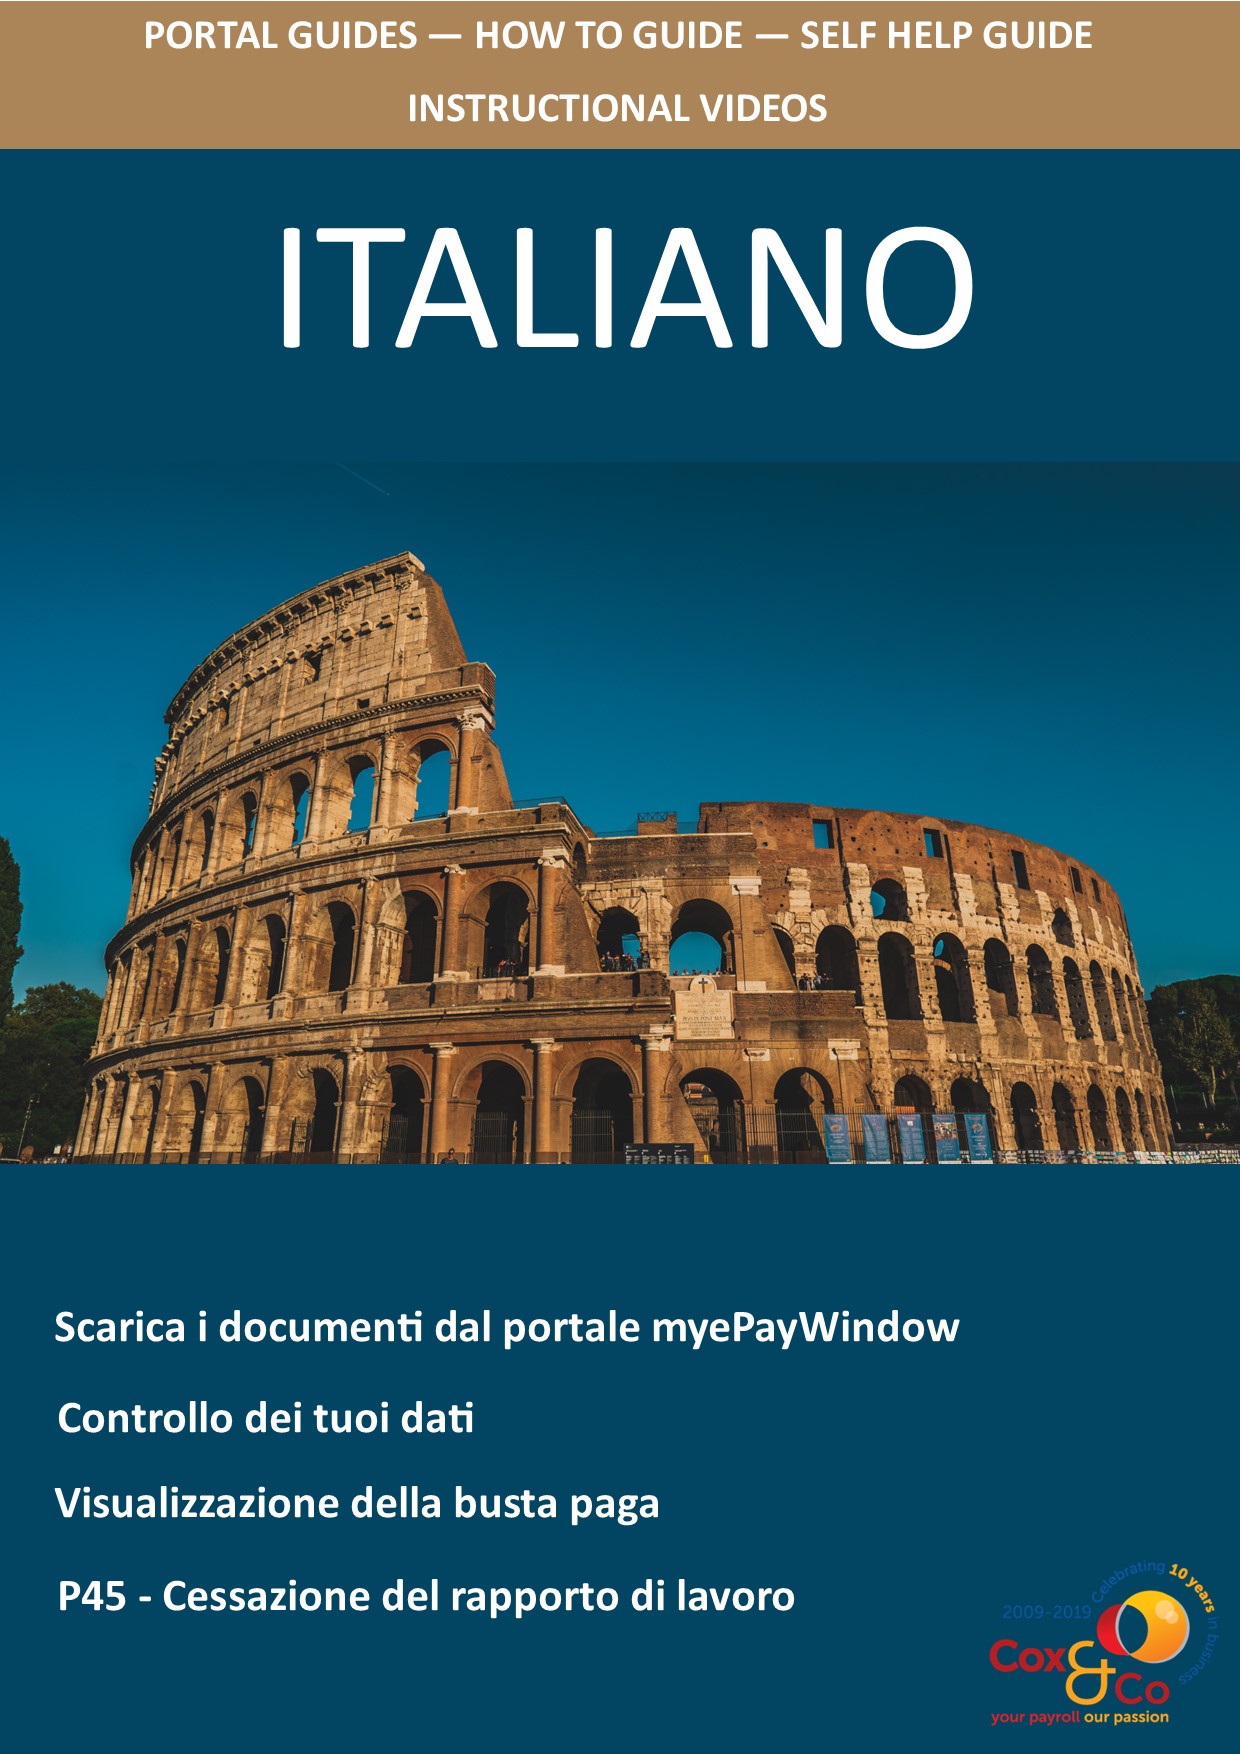 Italian Video Guide